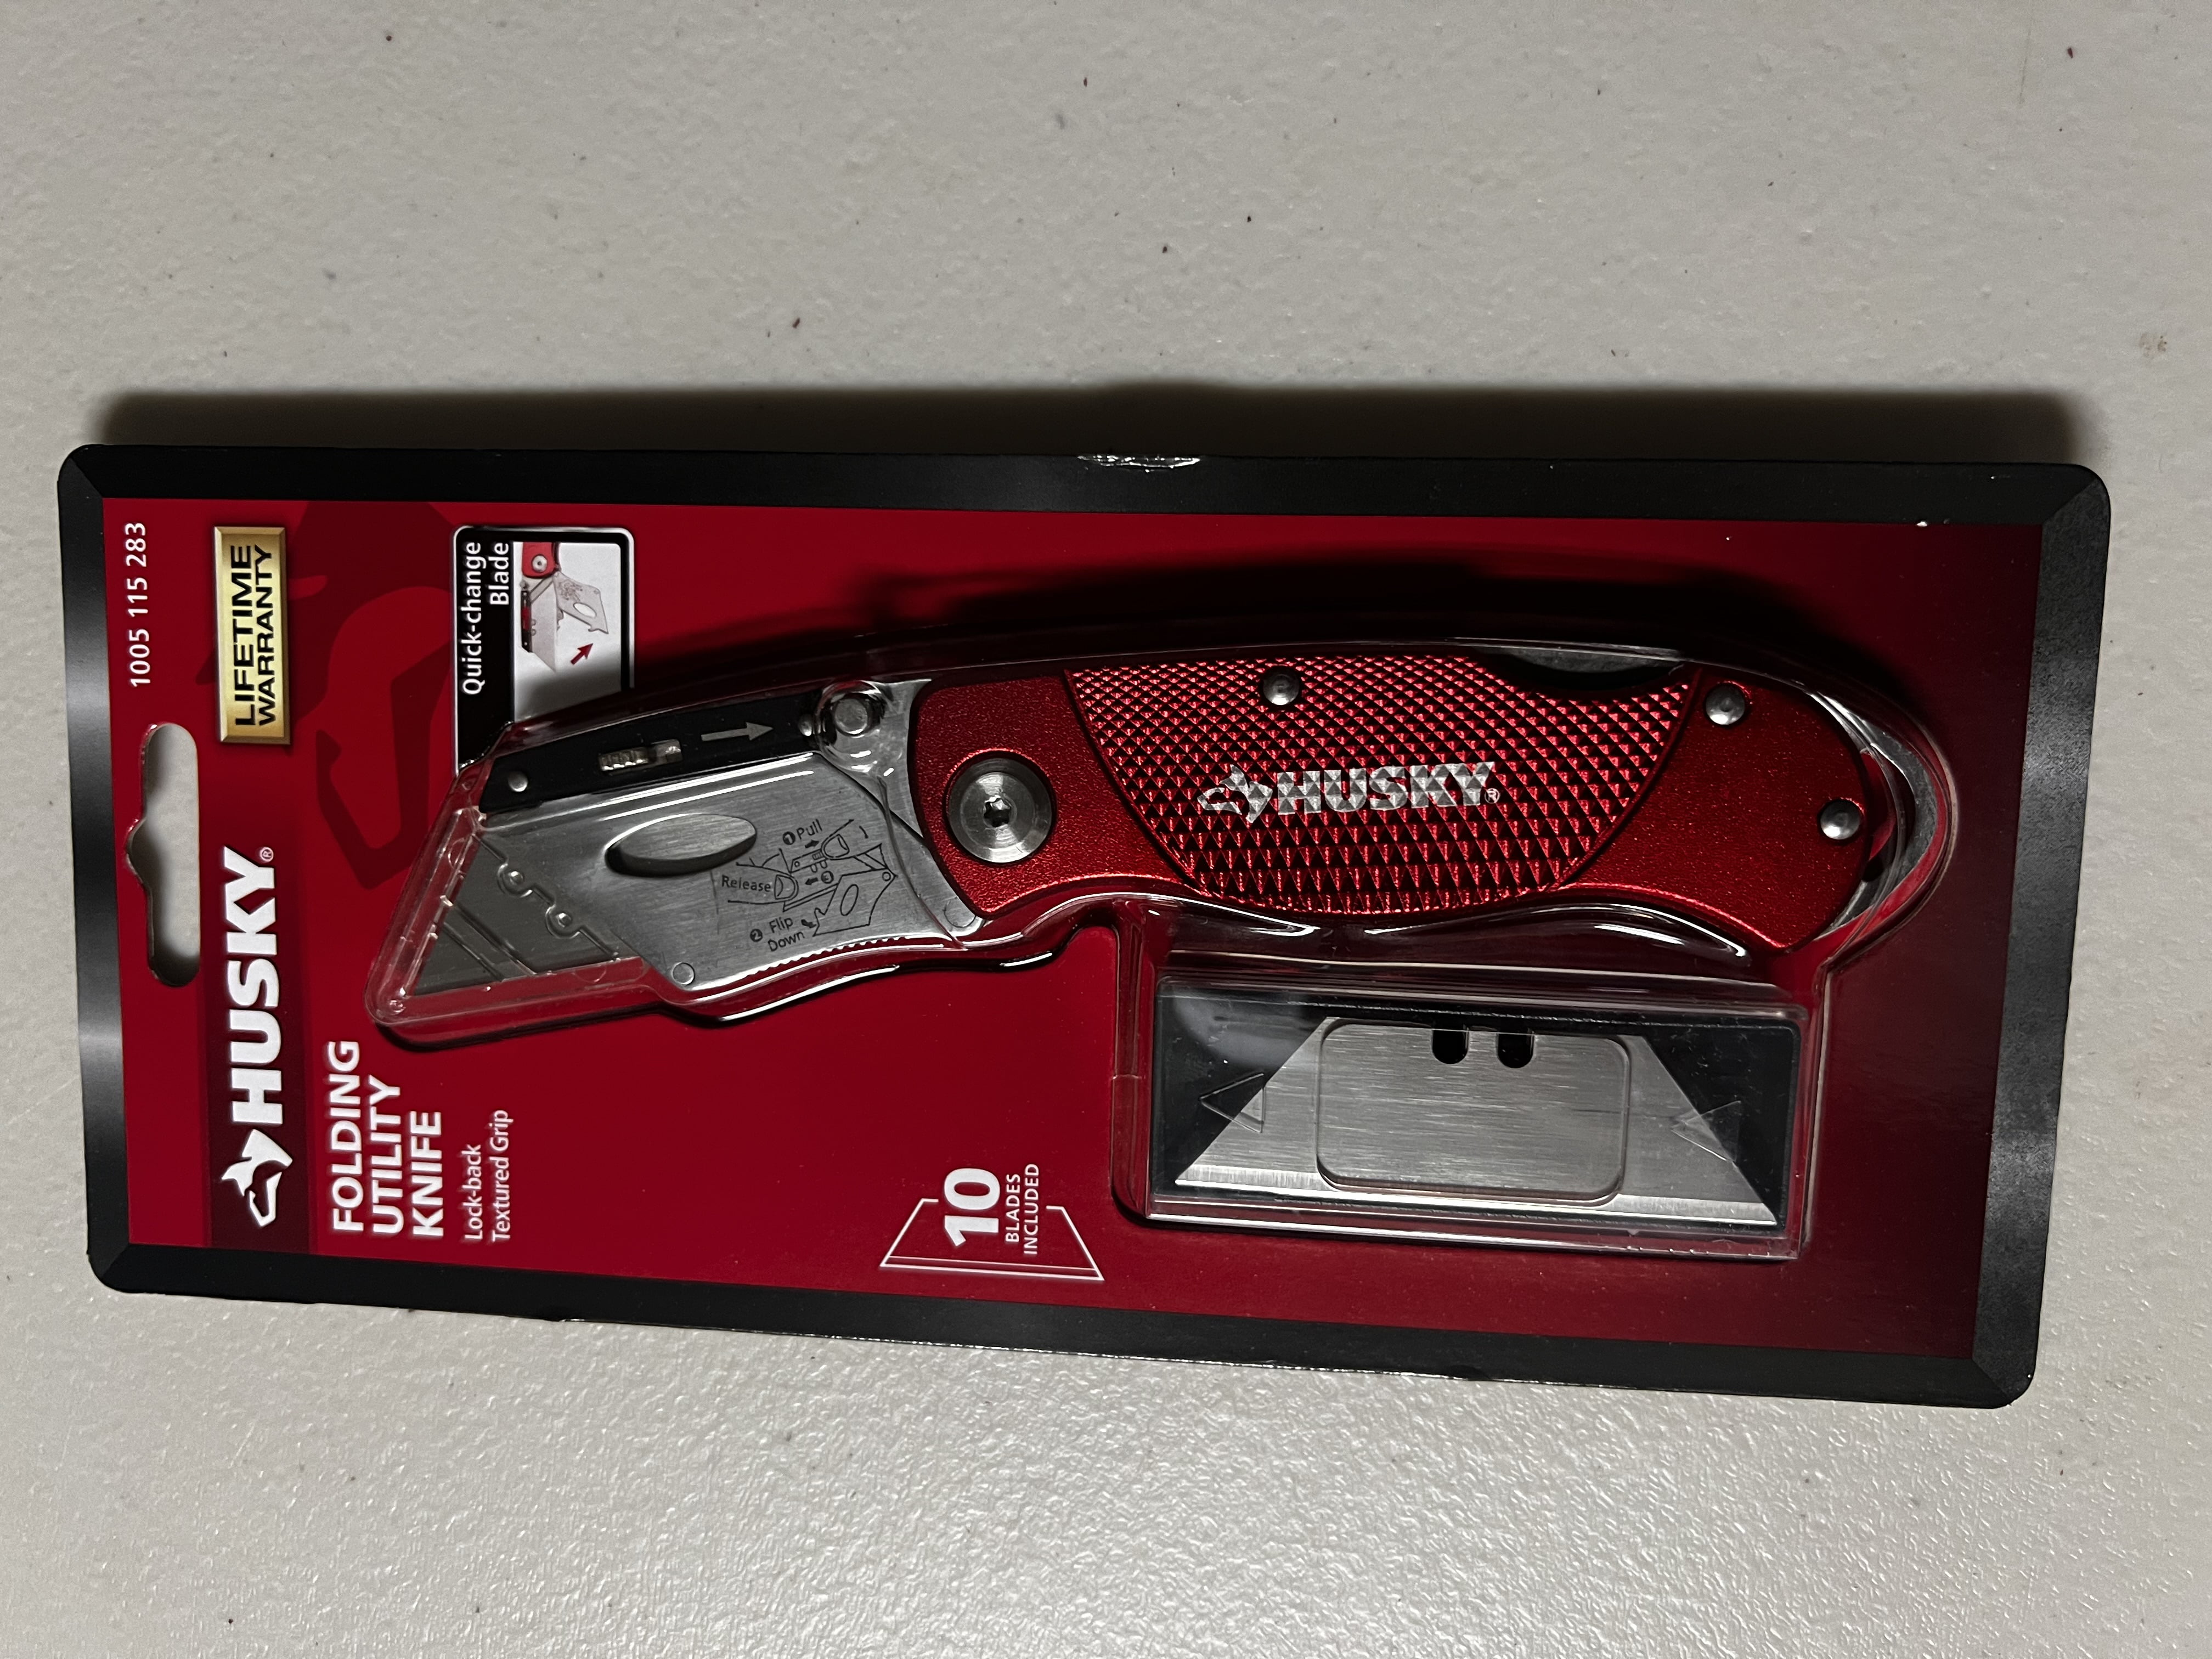 Husky Folding Lock-Back Utility Knife, Red with 10-Blades